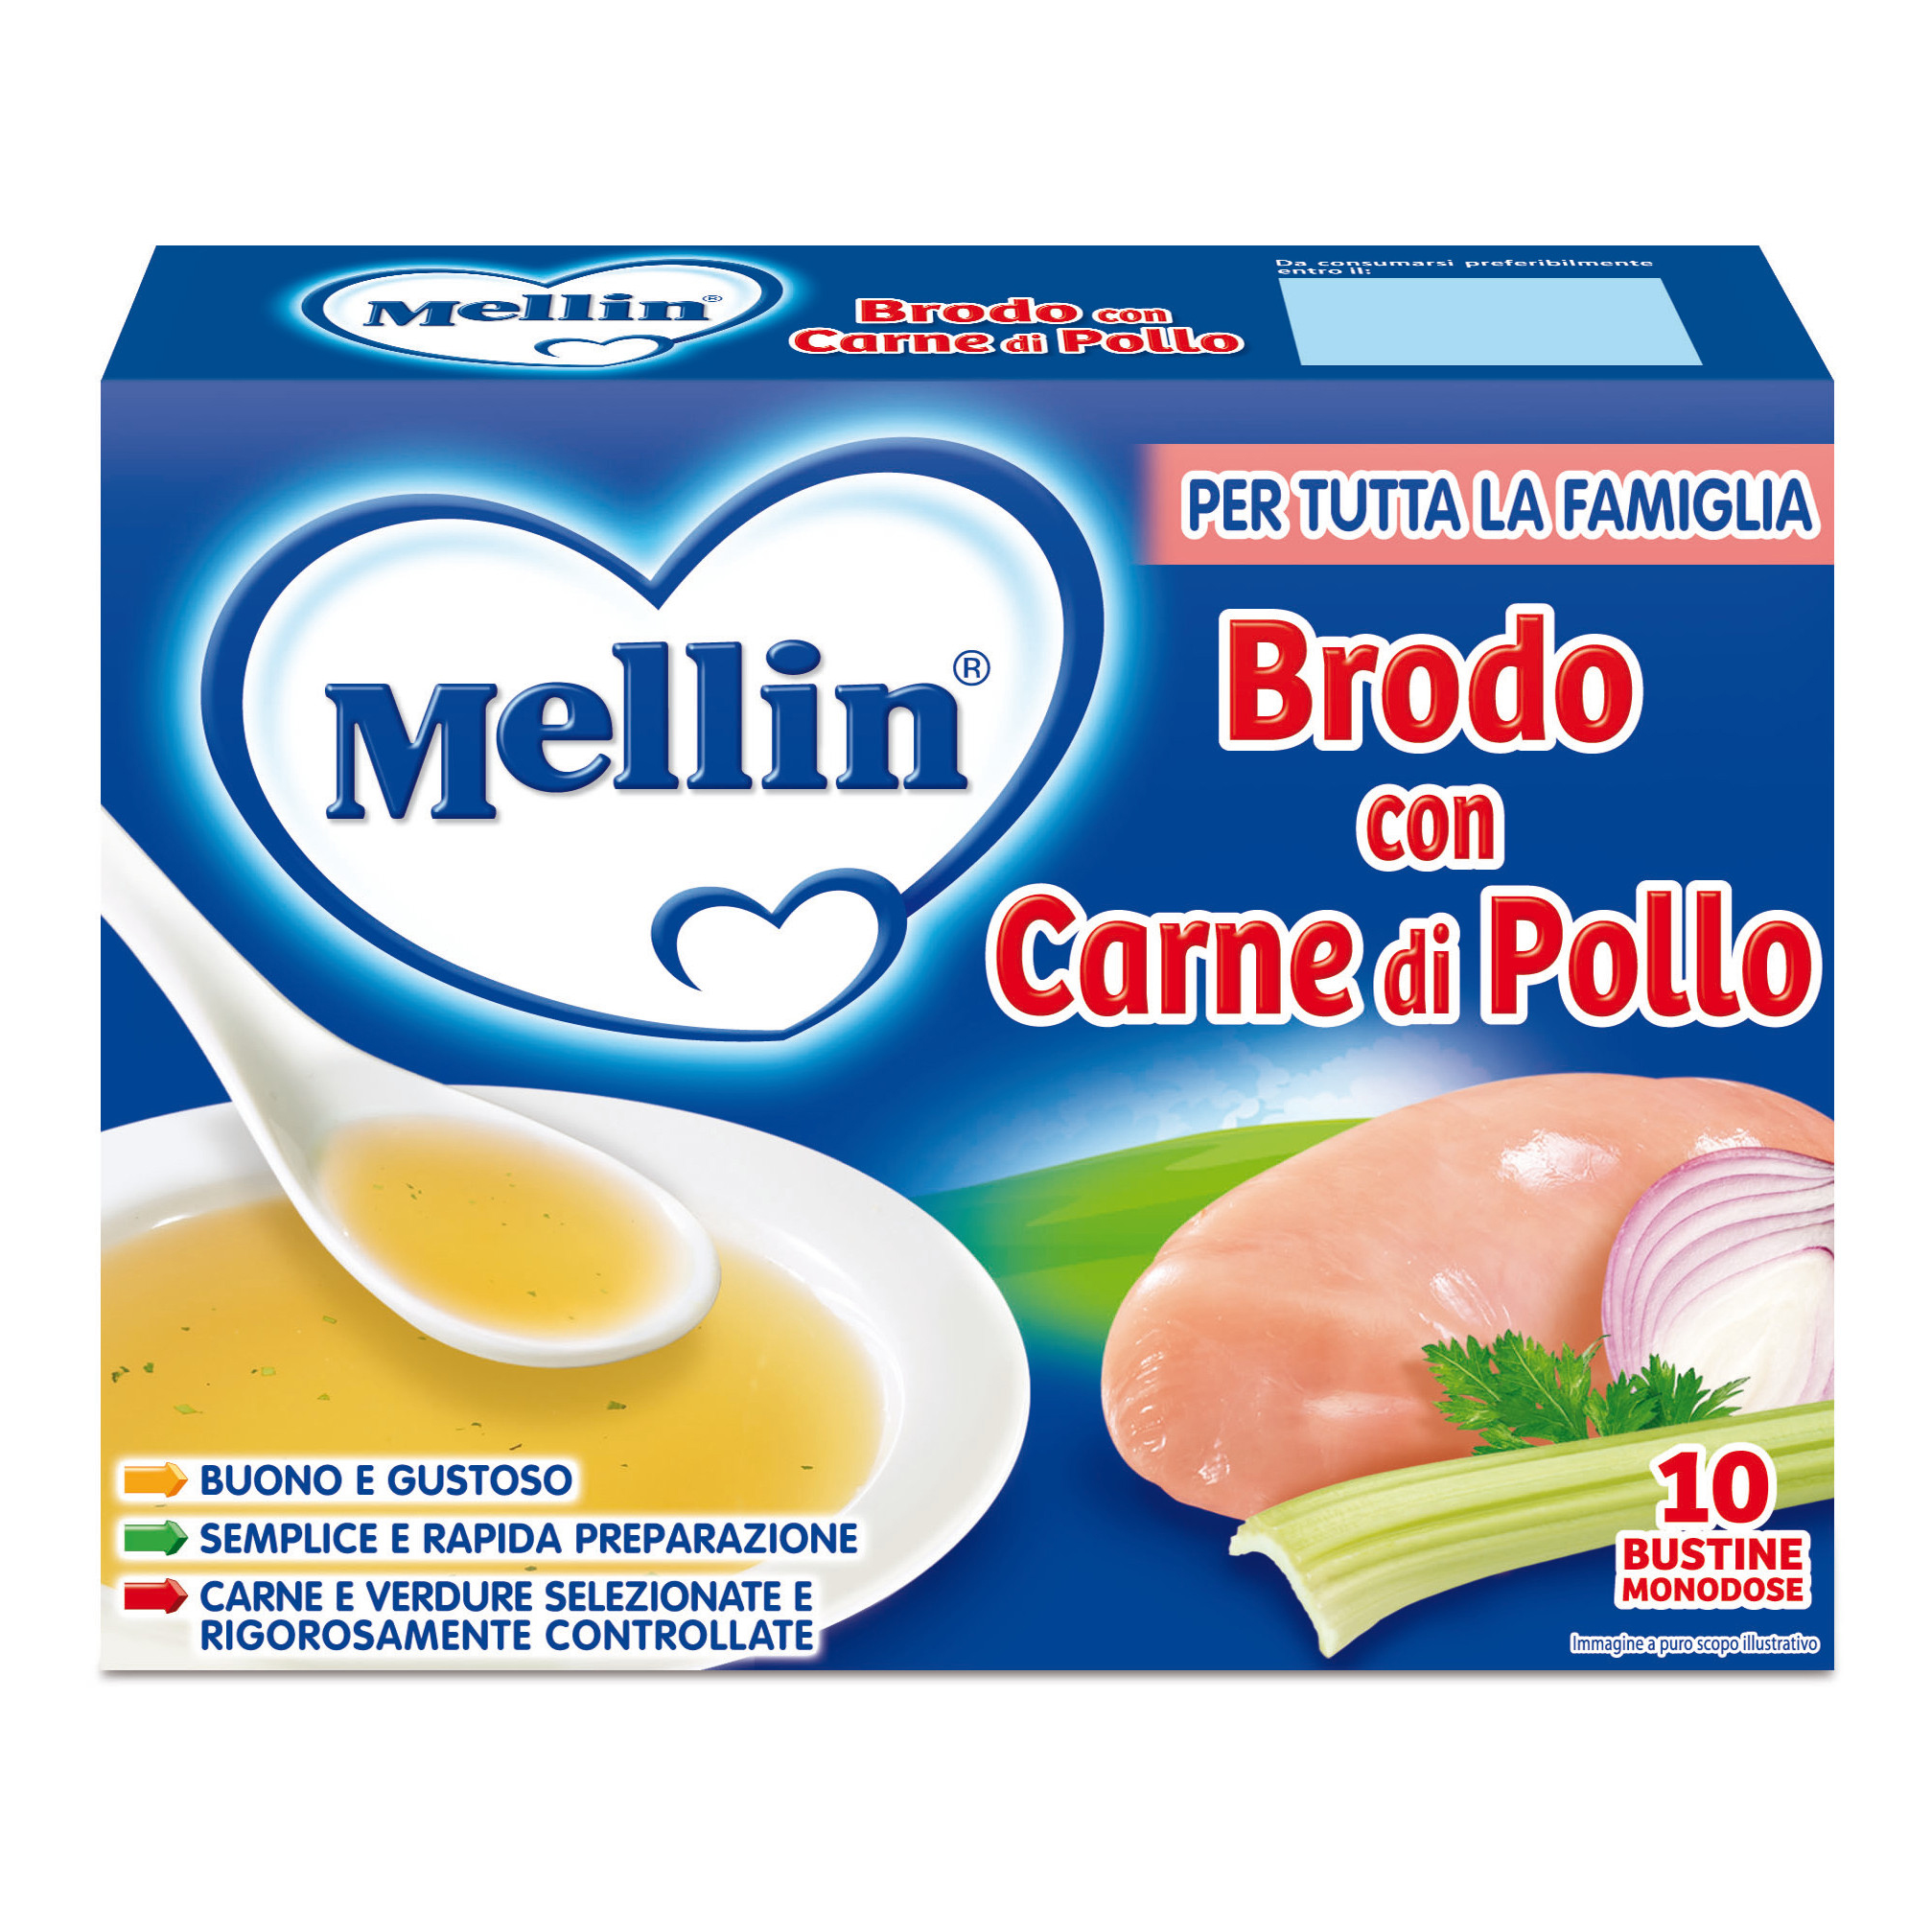 MELLIN Brodo Verdure 10 Buste